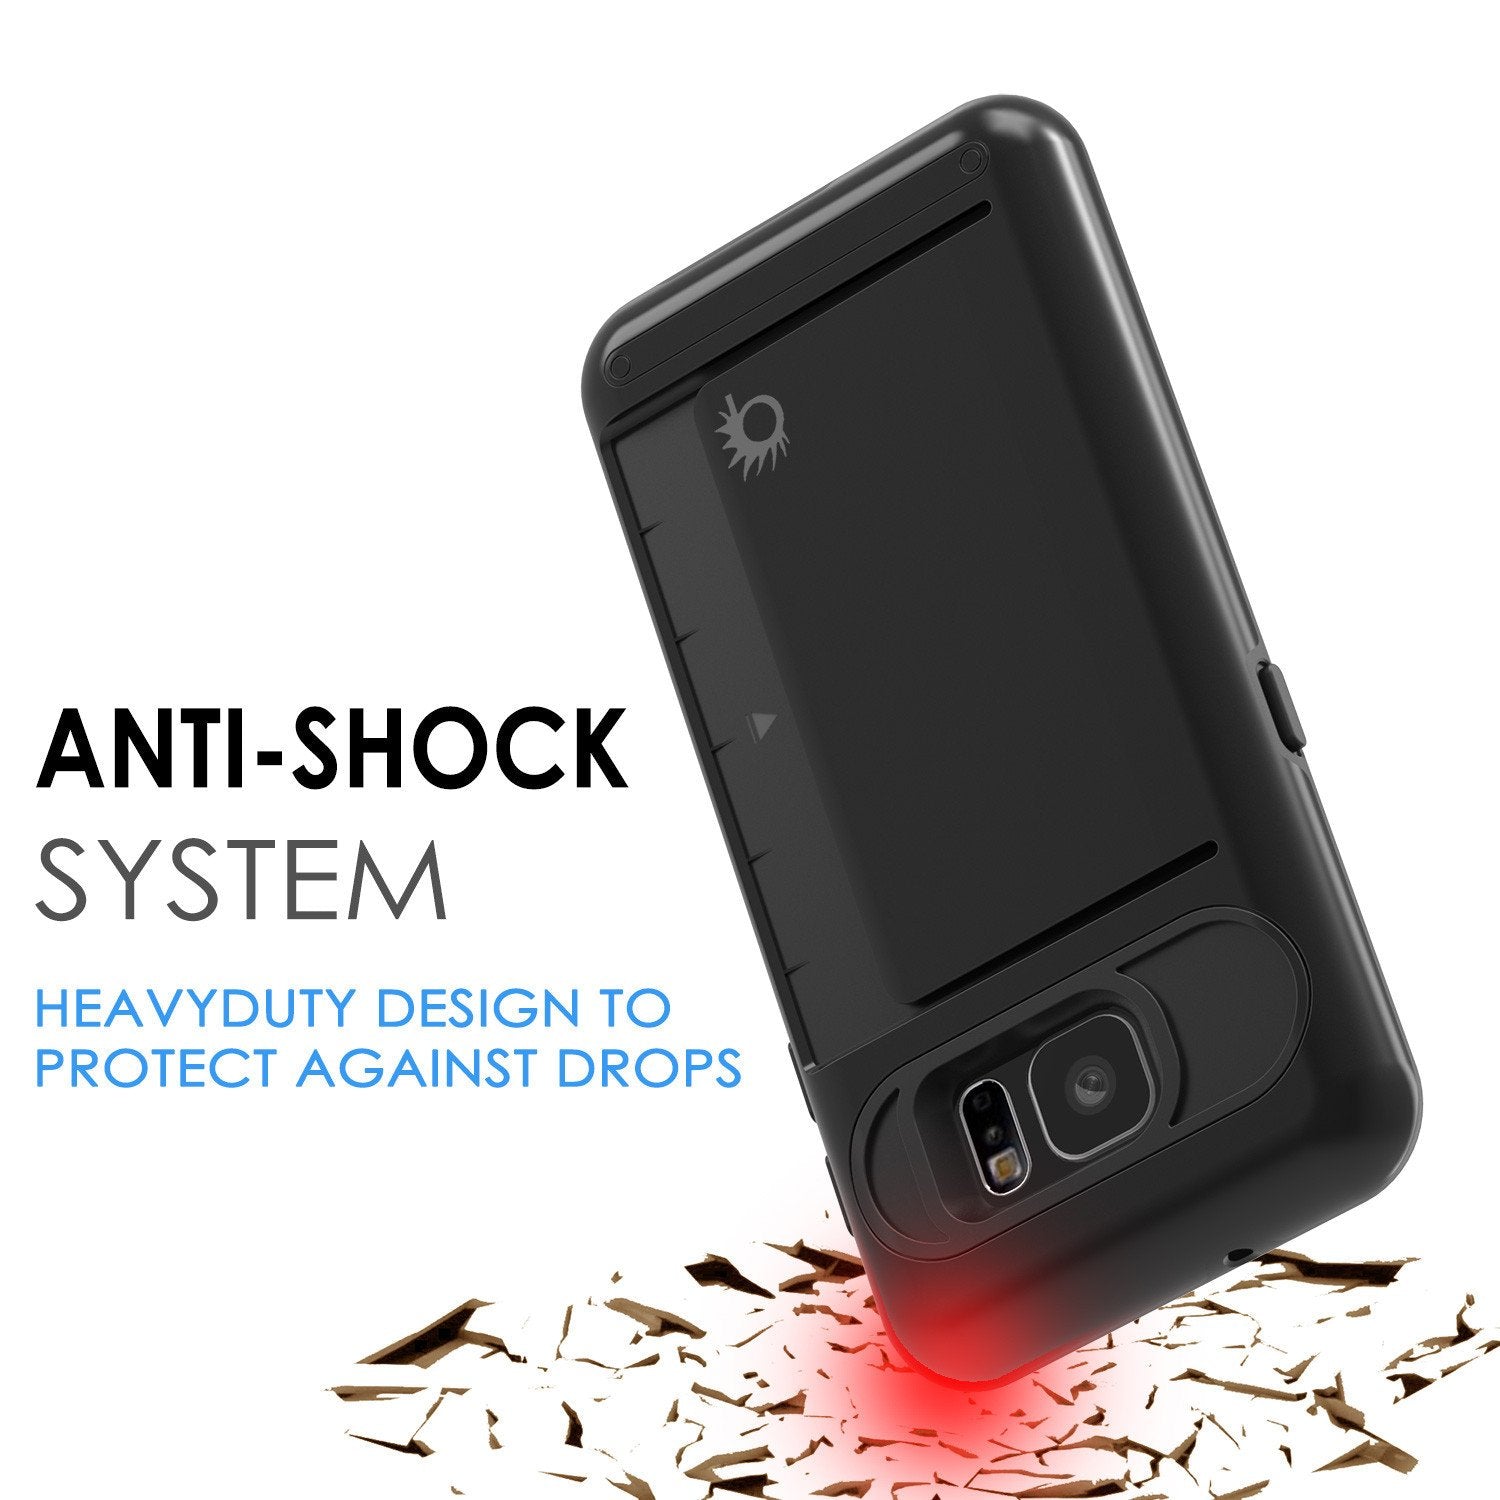 Galaxy S7 EDGE Case PunkCase CLUTCH Black Series Slim Armor Soft Cover Case w/ Screen Protector - PunkCase NZ